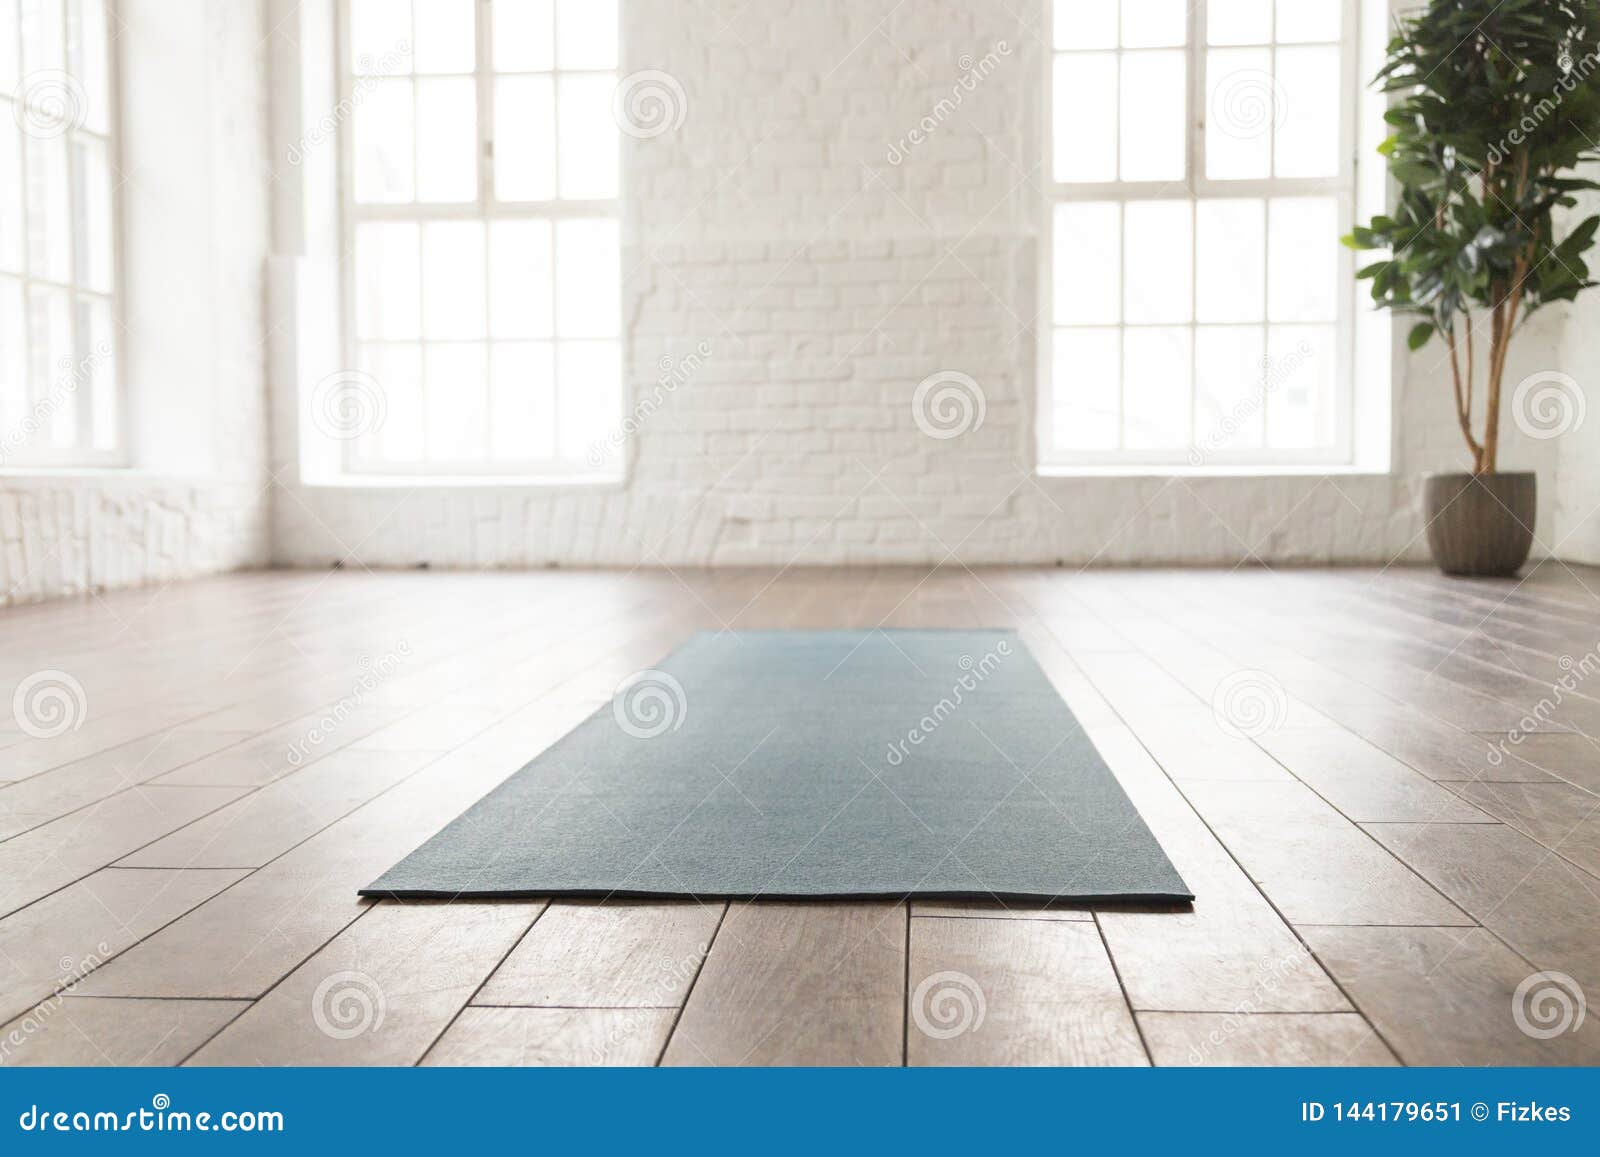 empty room in yoga studio, unrolled yoga mat on floor